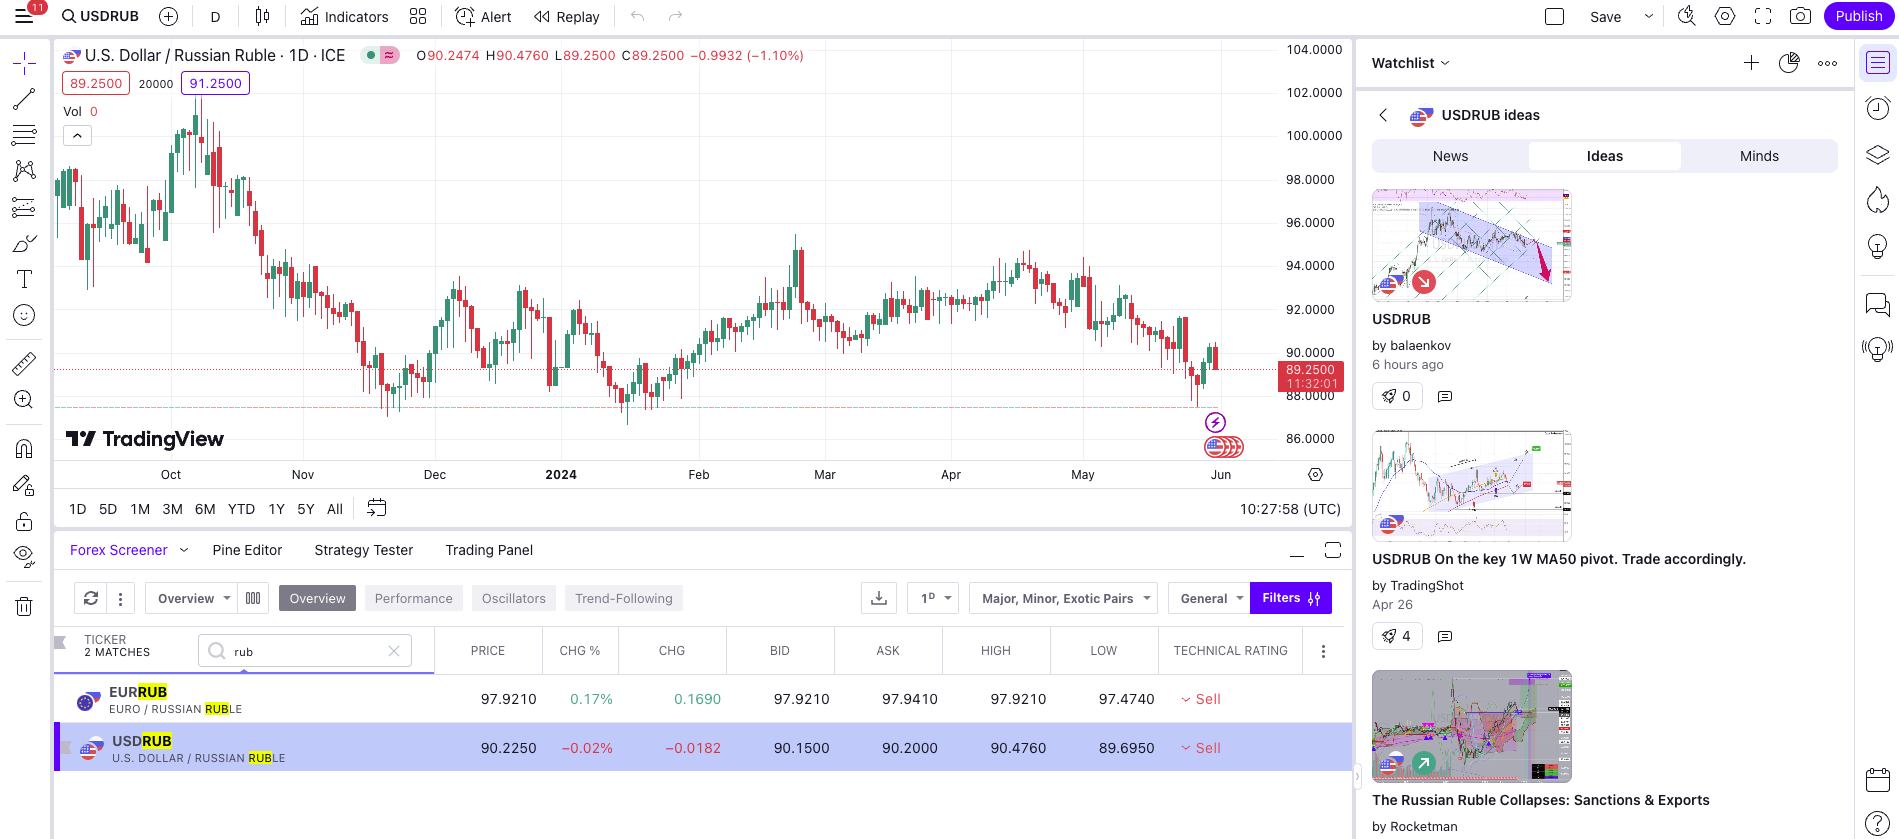 TradingView platform showing forex screener and USD/RUB trade ideas